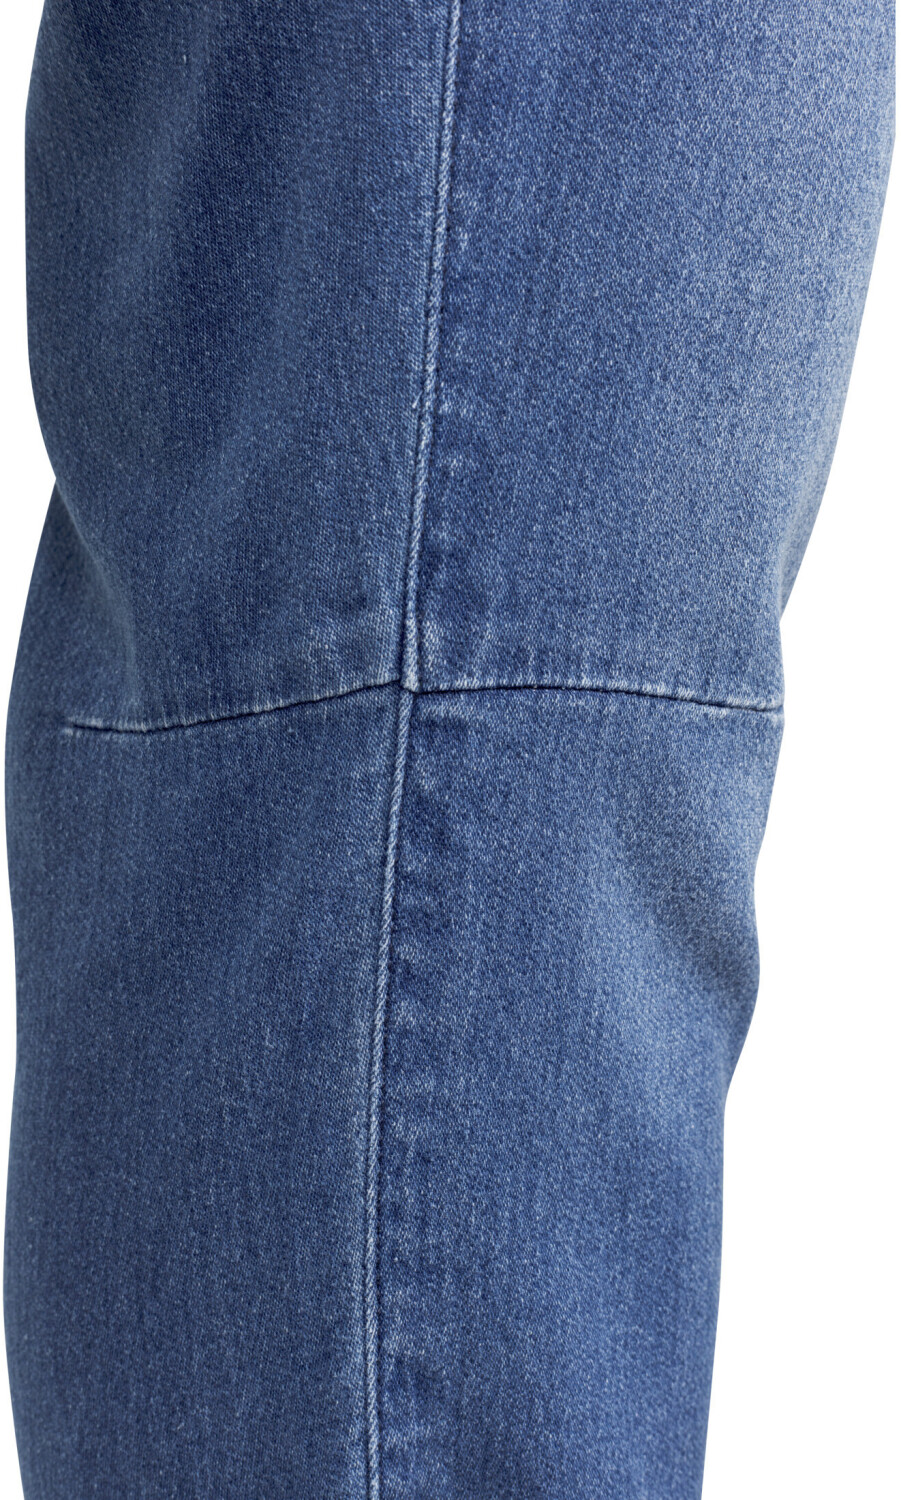 washed | Classics bei ab 32,99 Urban Preisvergleich Knitted (TB1794-00799-0042) Jogpants € Denim blue